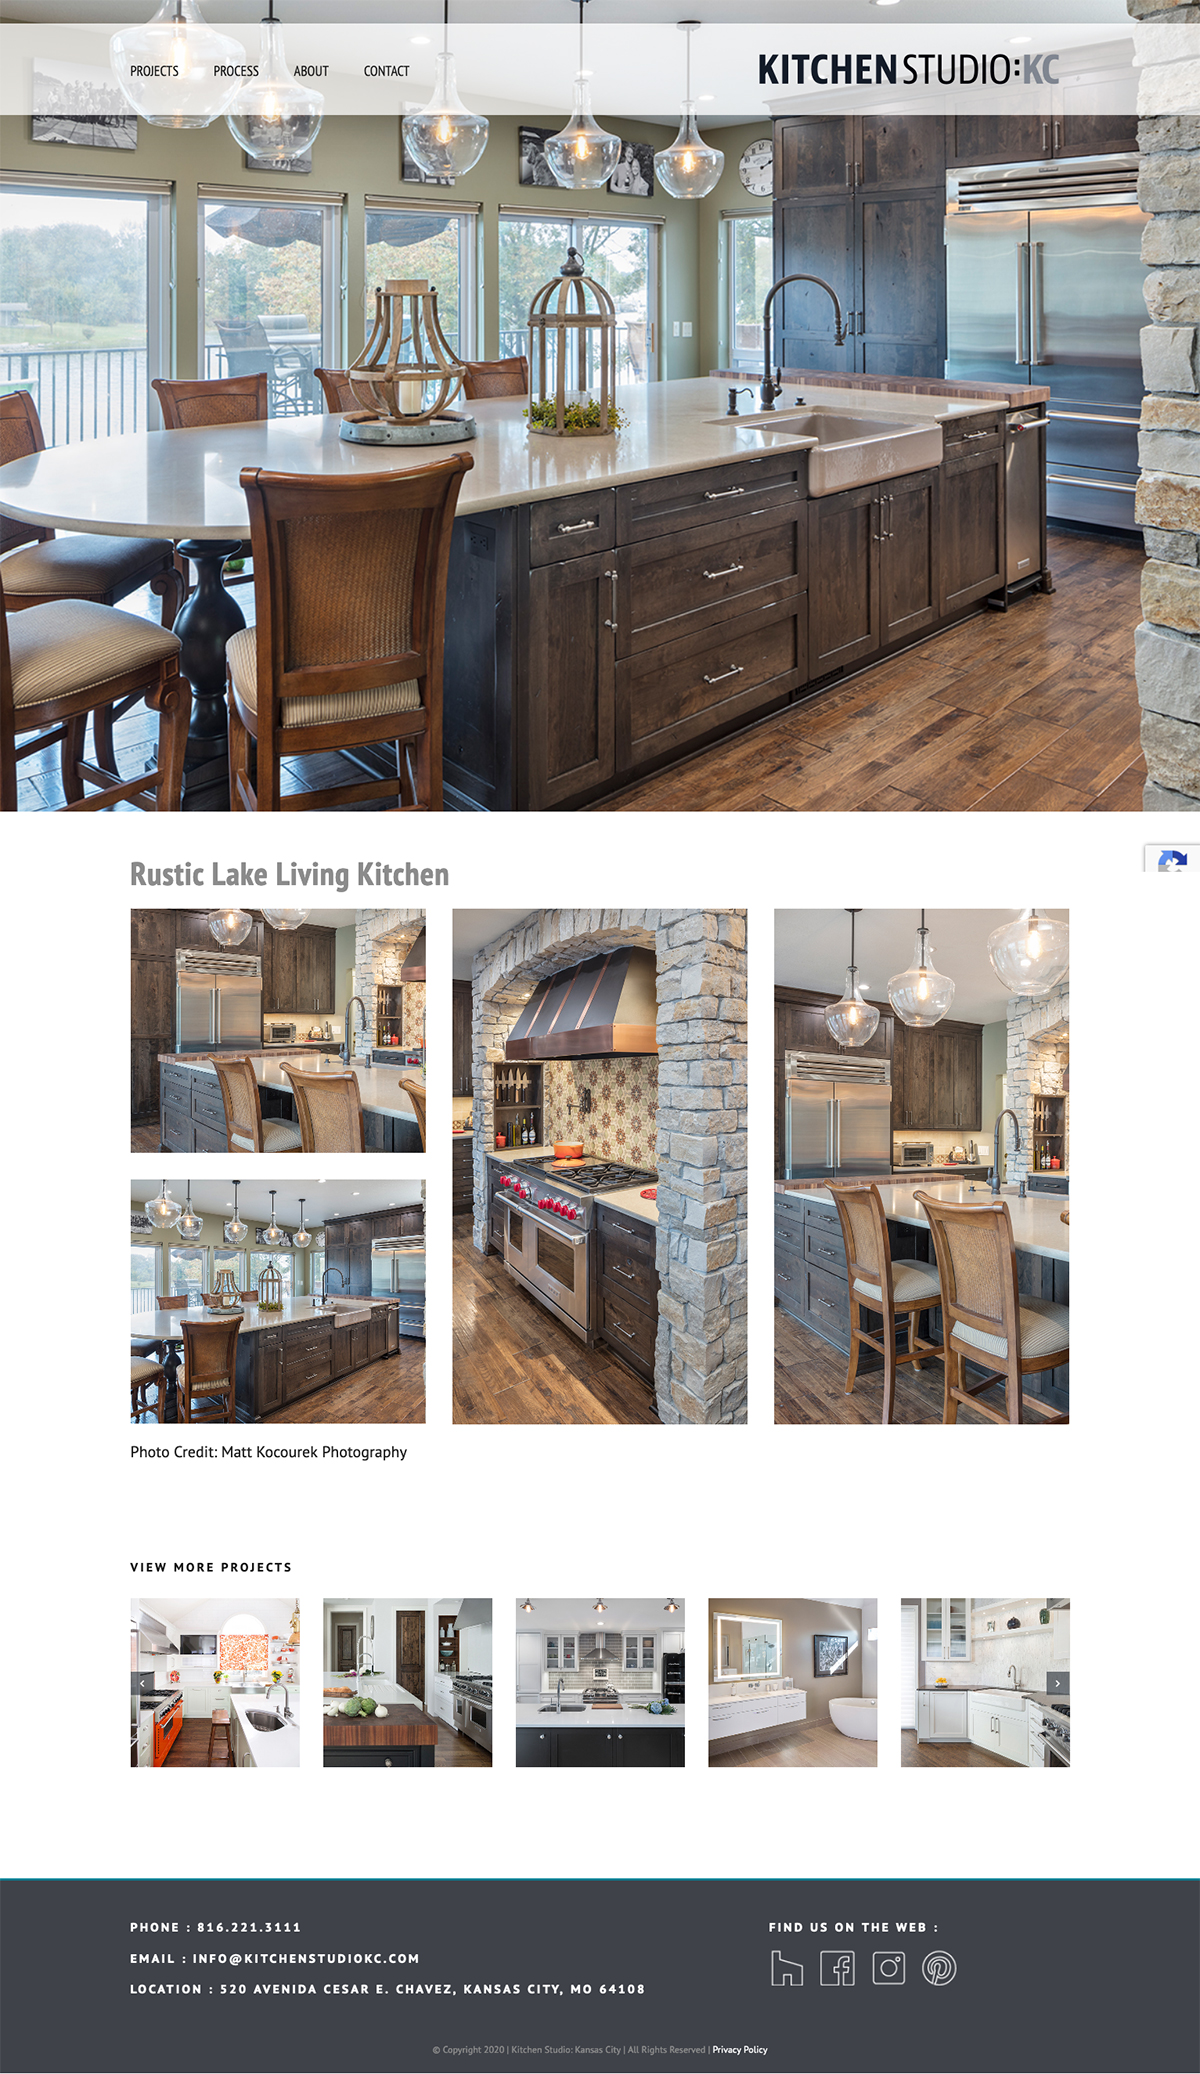 Kitchen Studio:KC business portfolio website